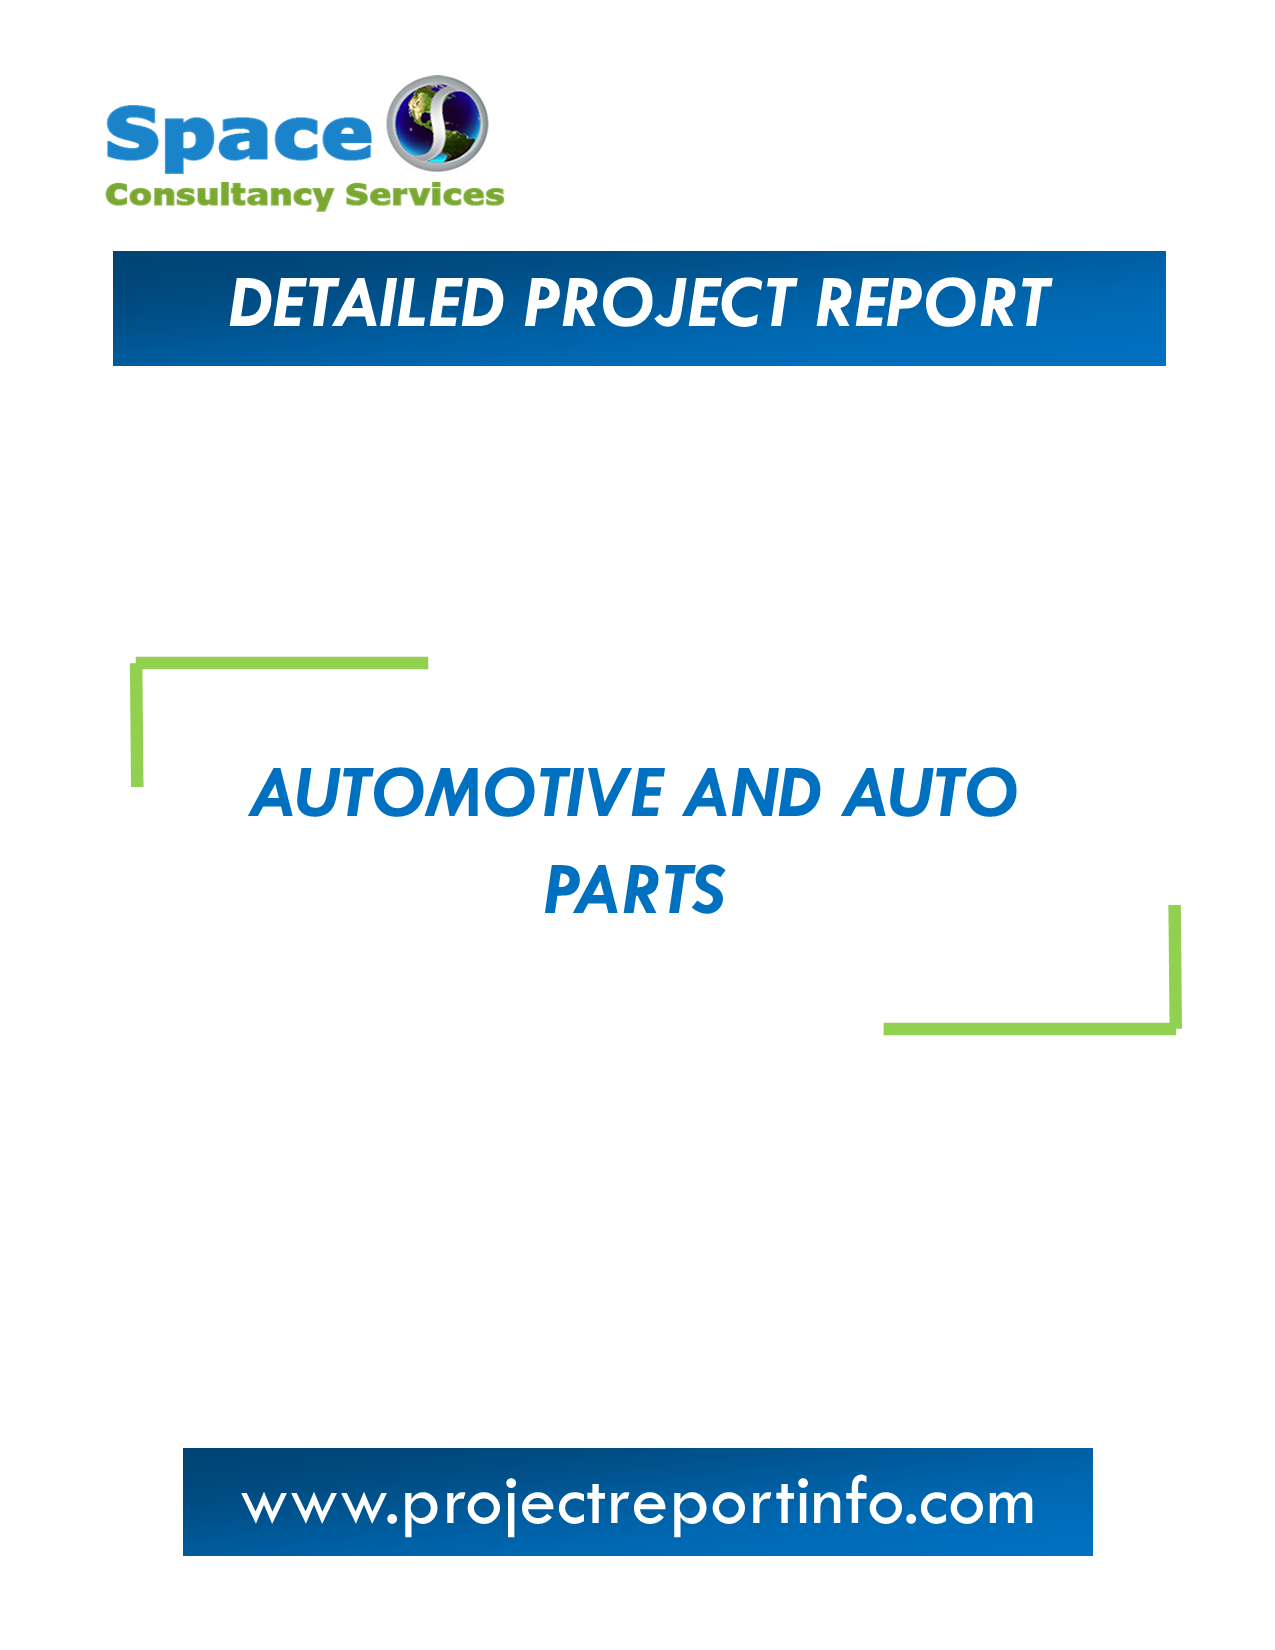 Automotive and Auto Parts